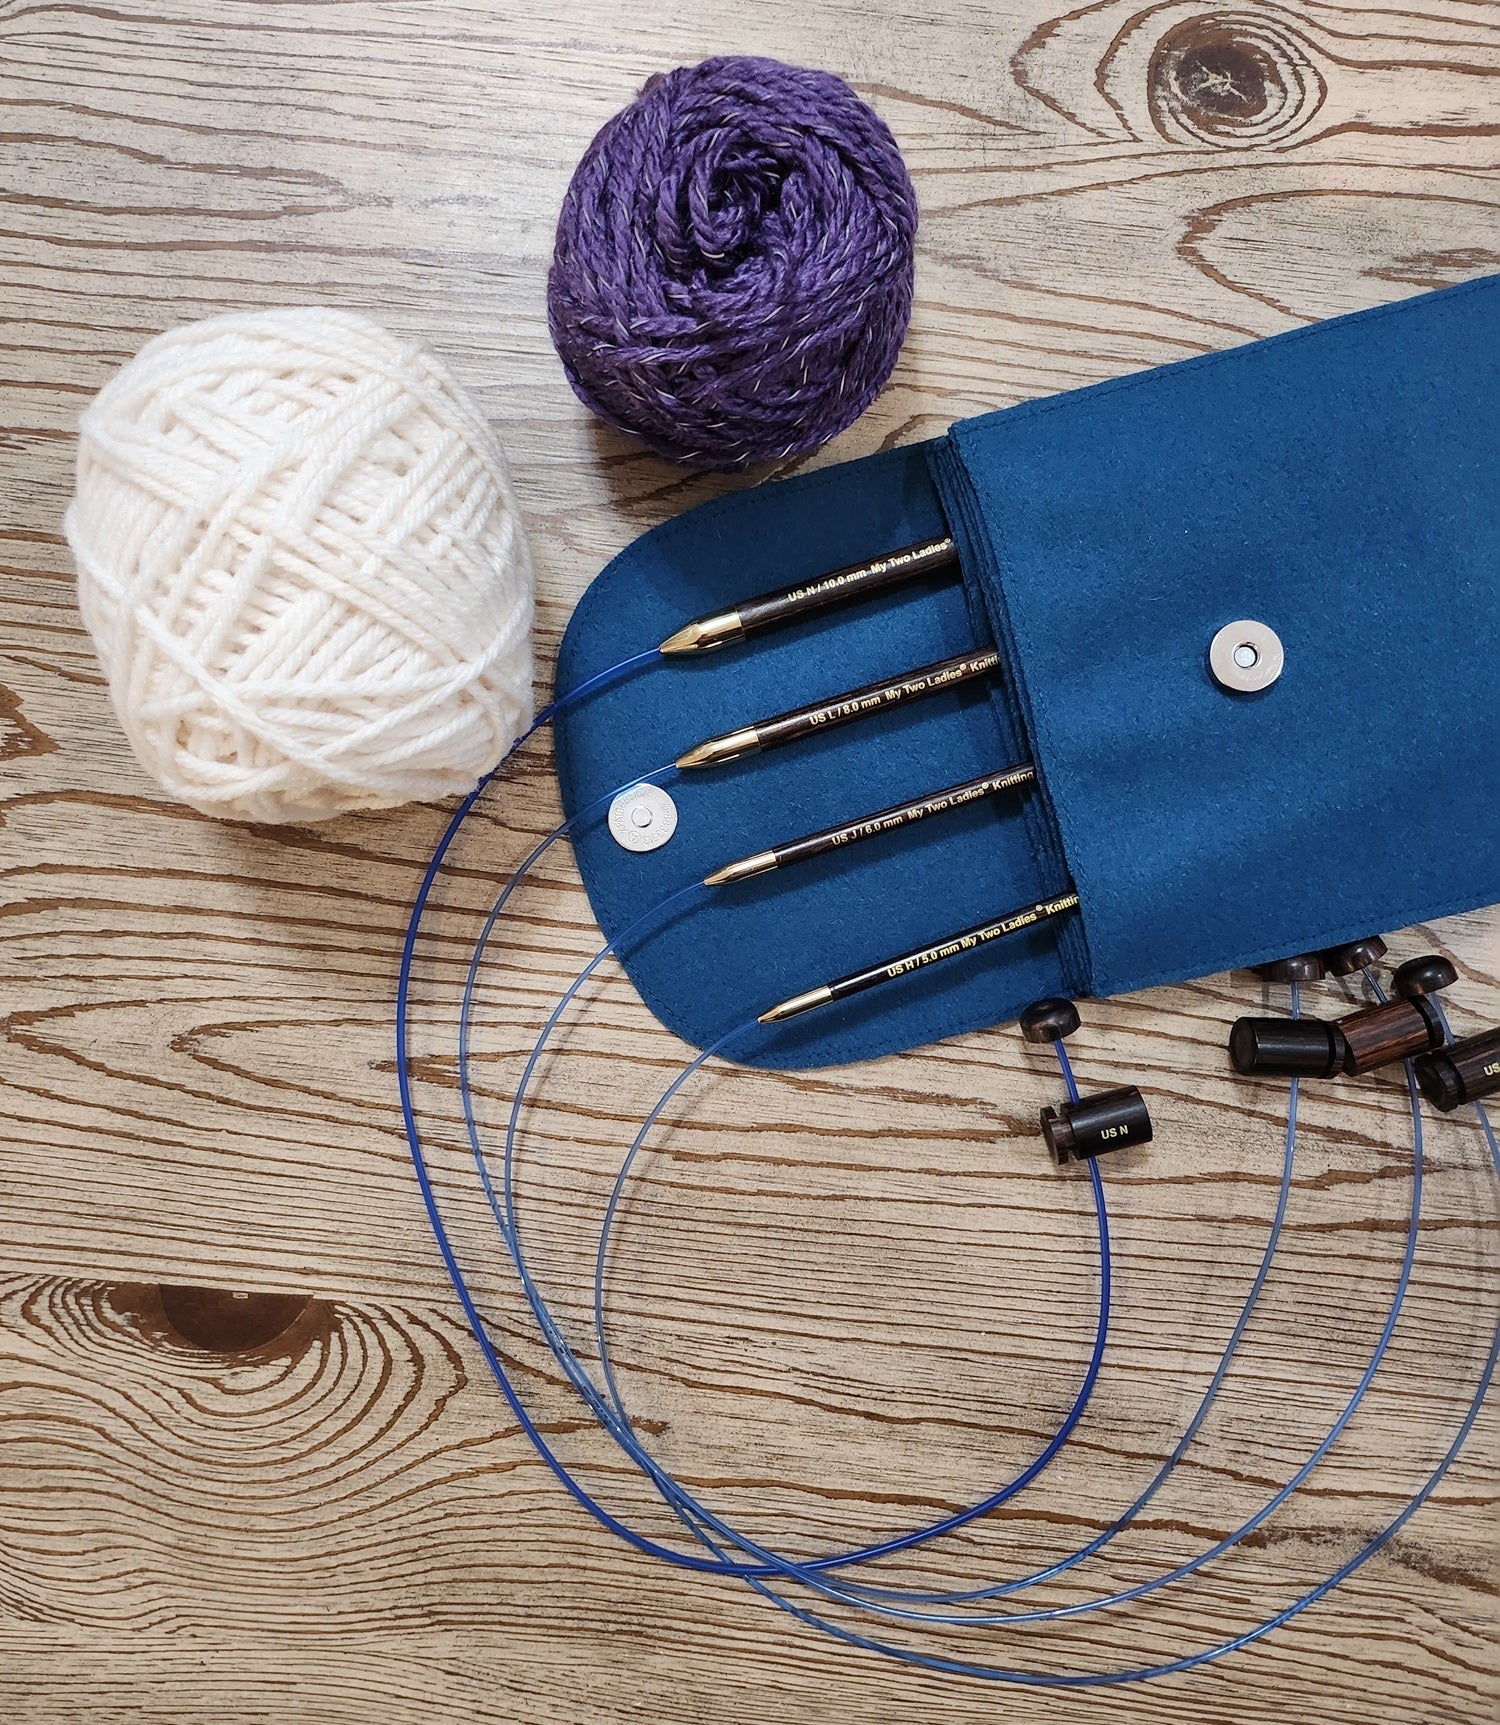 Artistic Wire Crochet Hook, Size 5mm / 8mm / 10mm (3 Piece Set